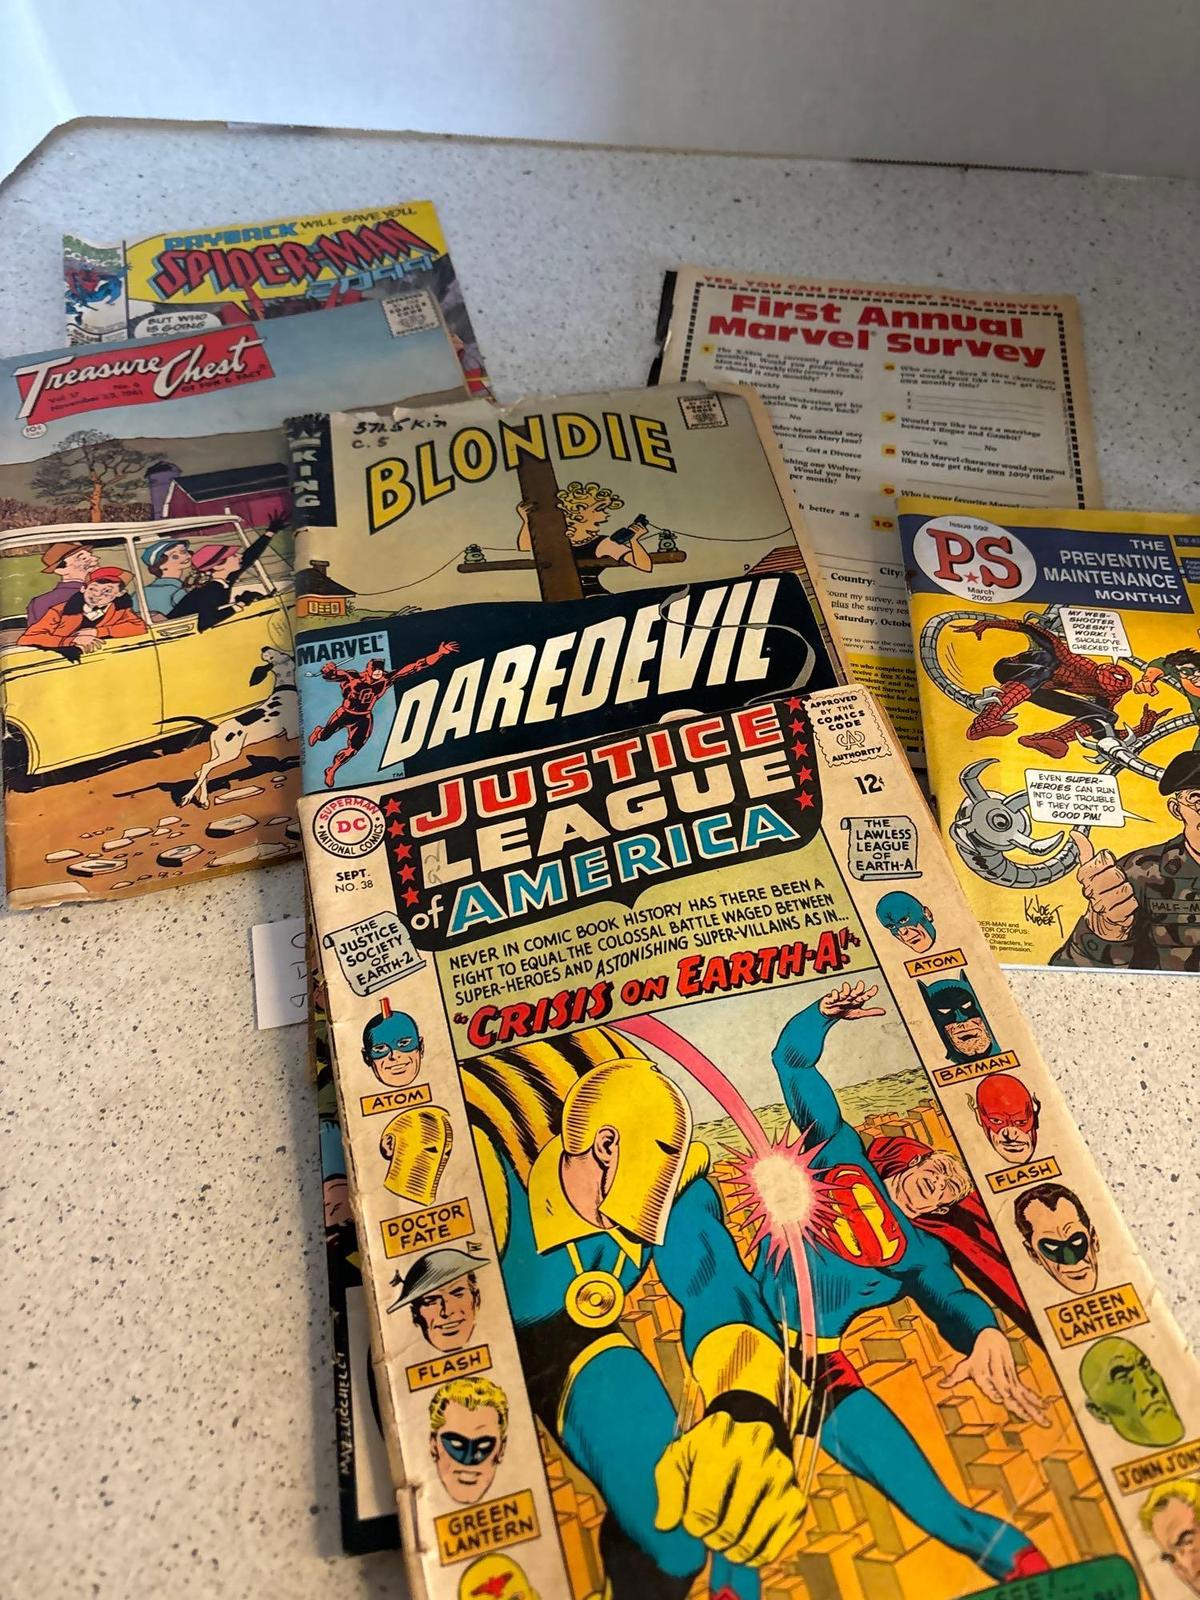 Comic books daredevil Justice league etc.